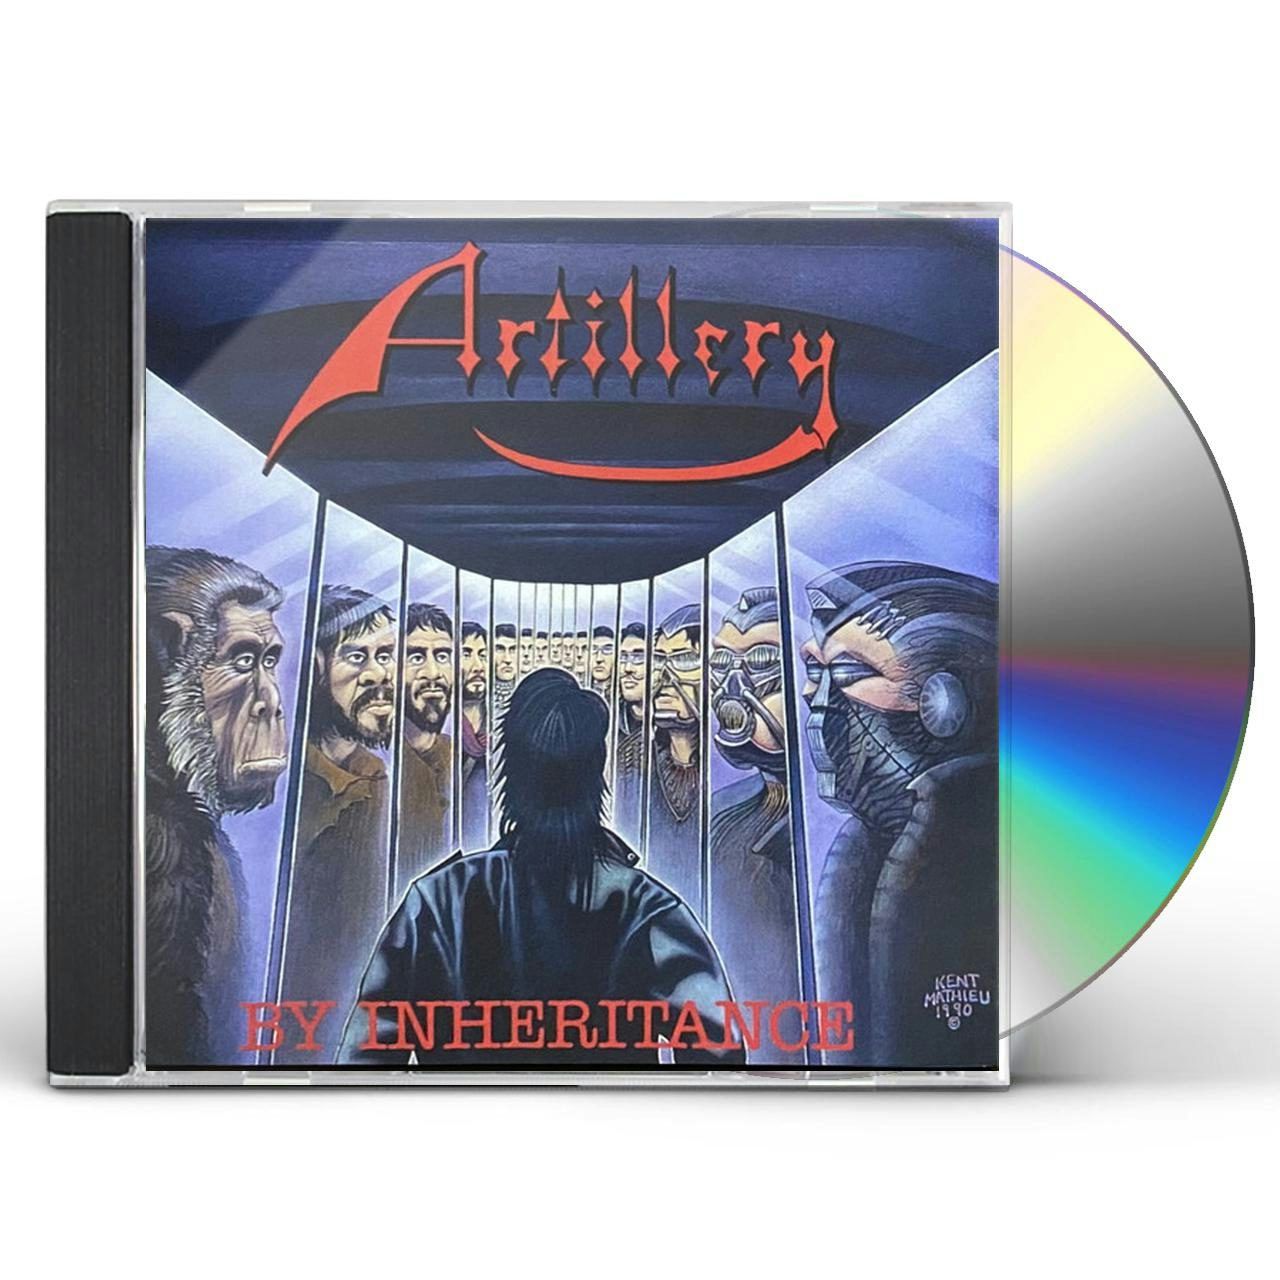 by inheritance cd - Artillery